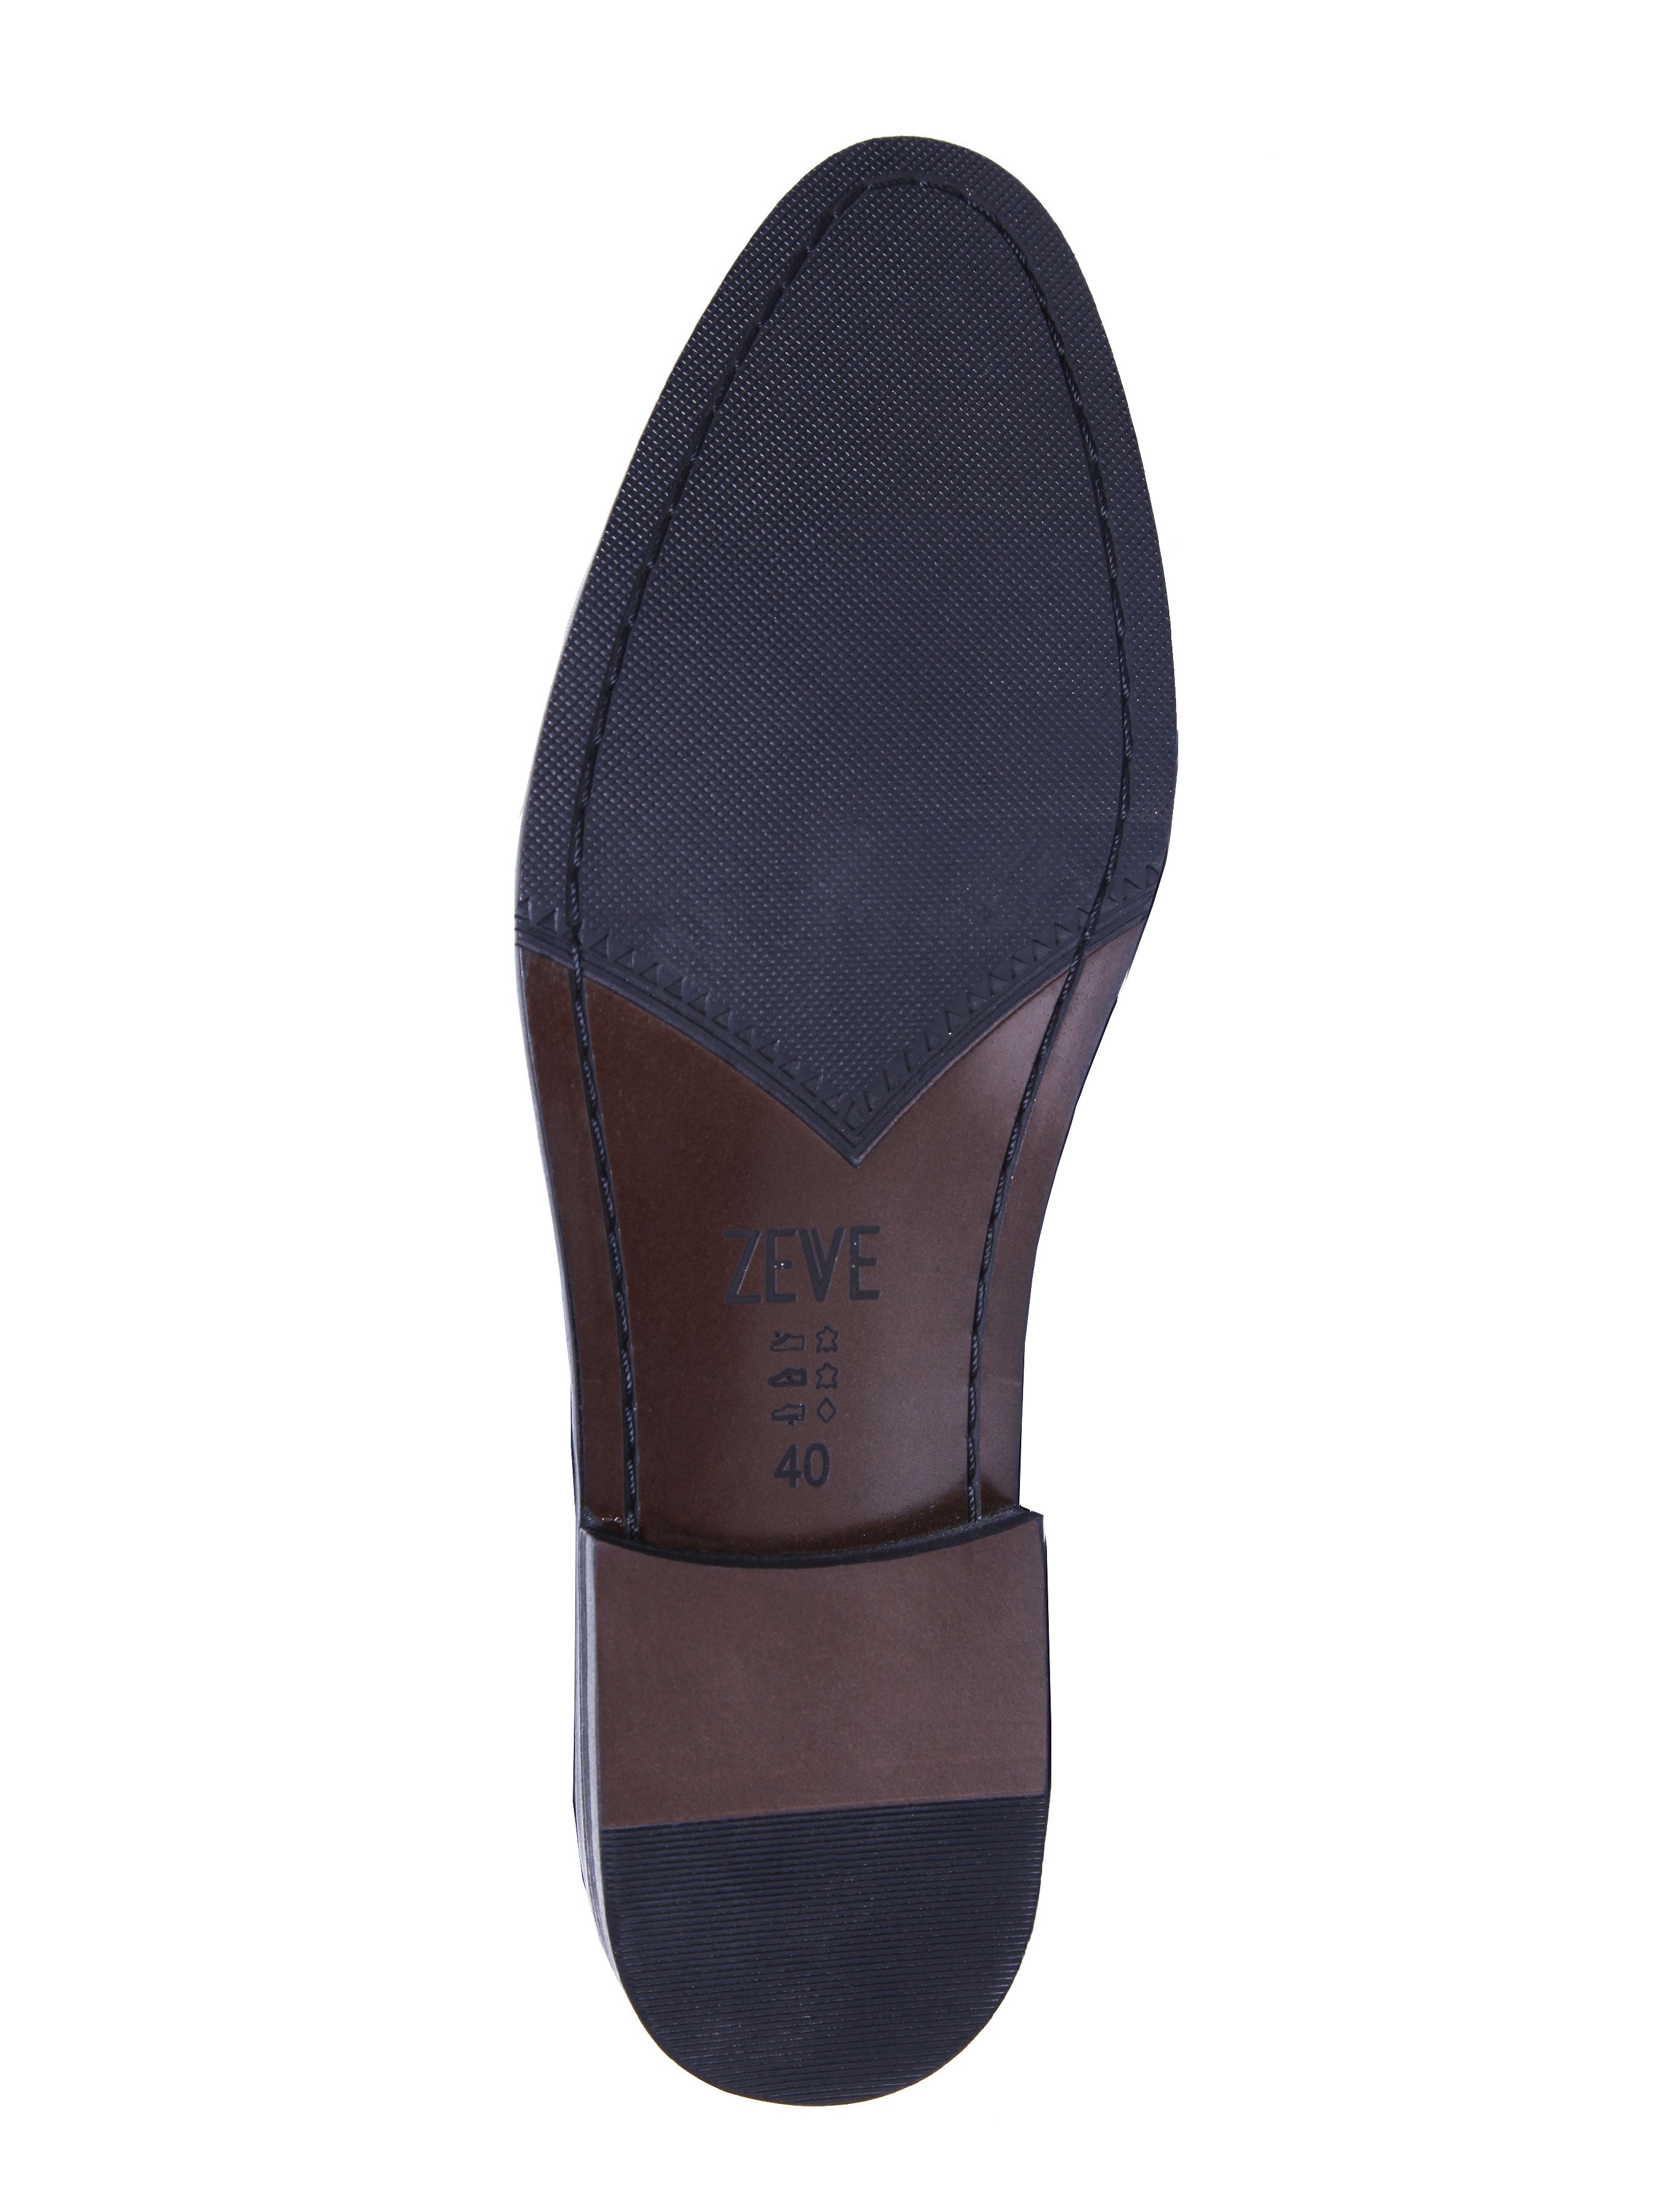 Loafer Slipper - Black Pebble Grain Leather - Zeve Shoes